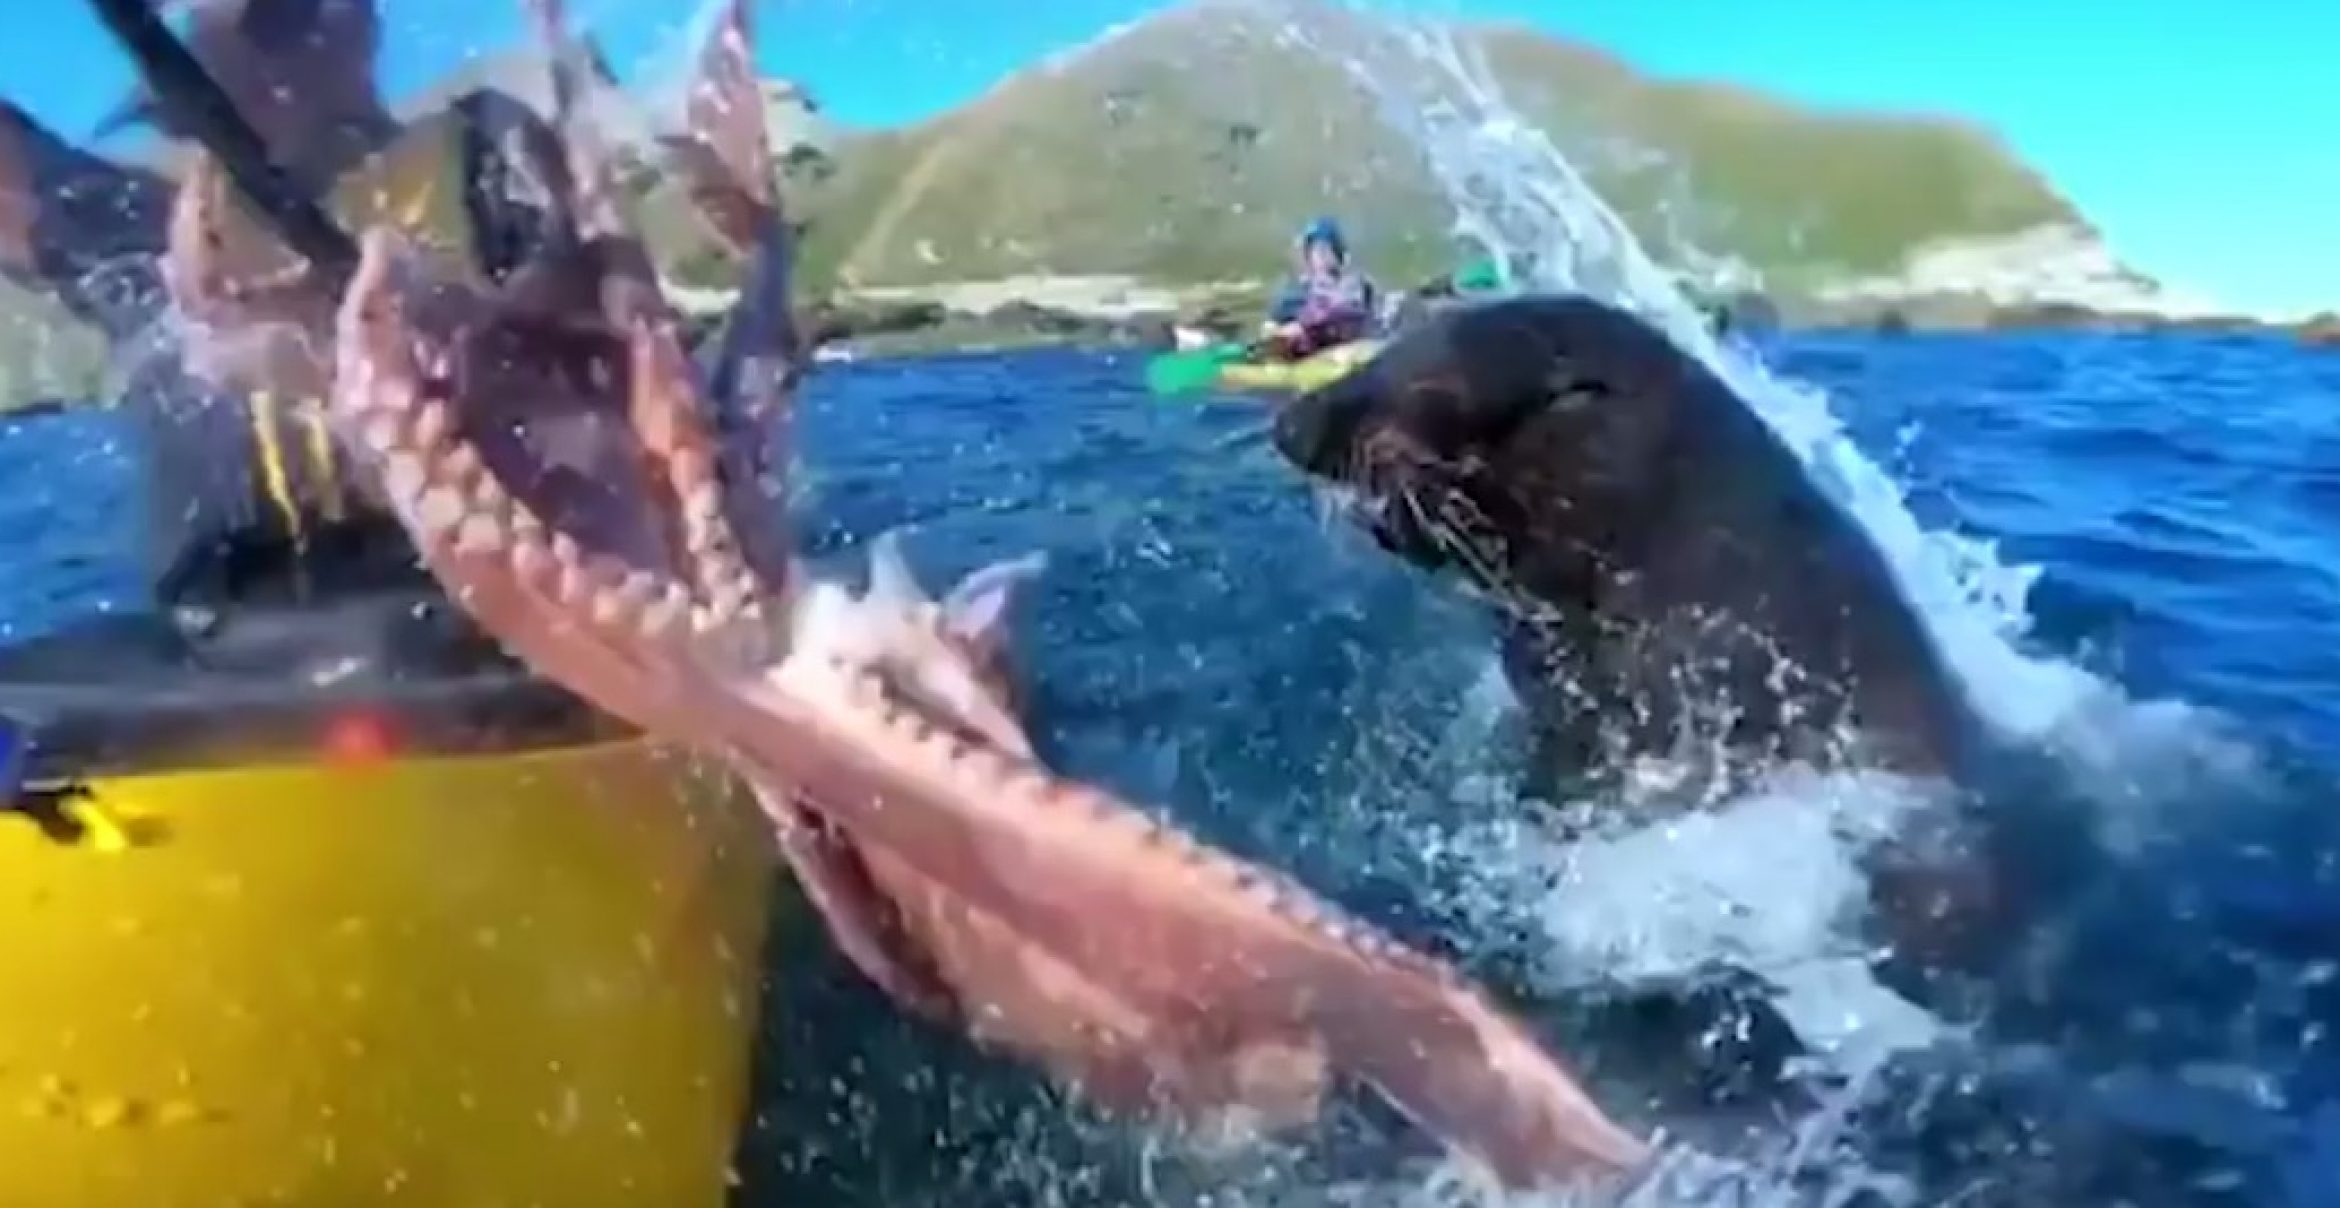 Nature fights back: Robbe gibt Kajakfahrer Ohrfeige mit einem Oktopus